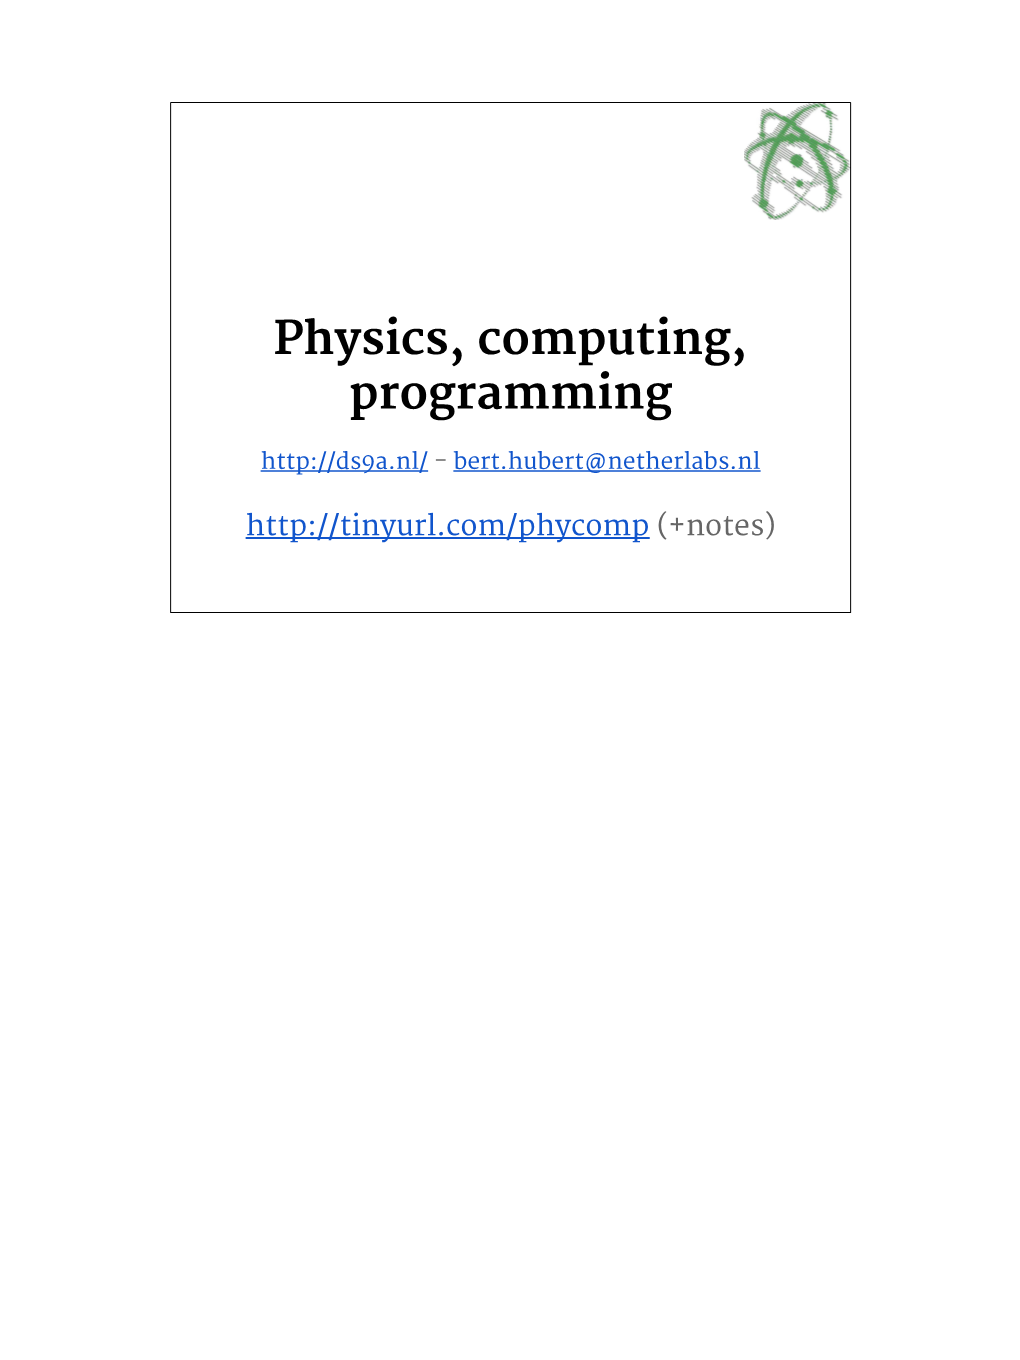 Computer Programming & Physics